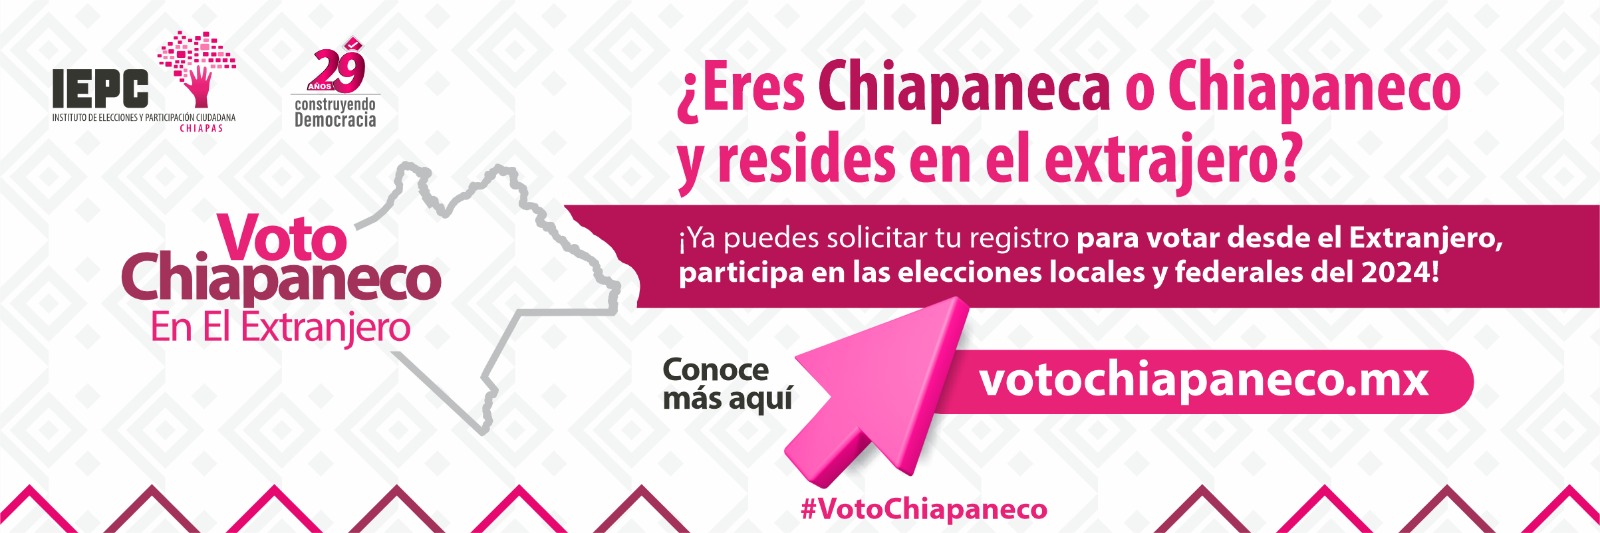 14_voto_chiapaneco